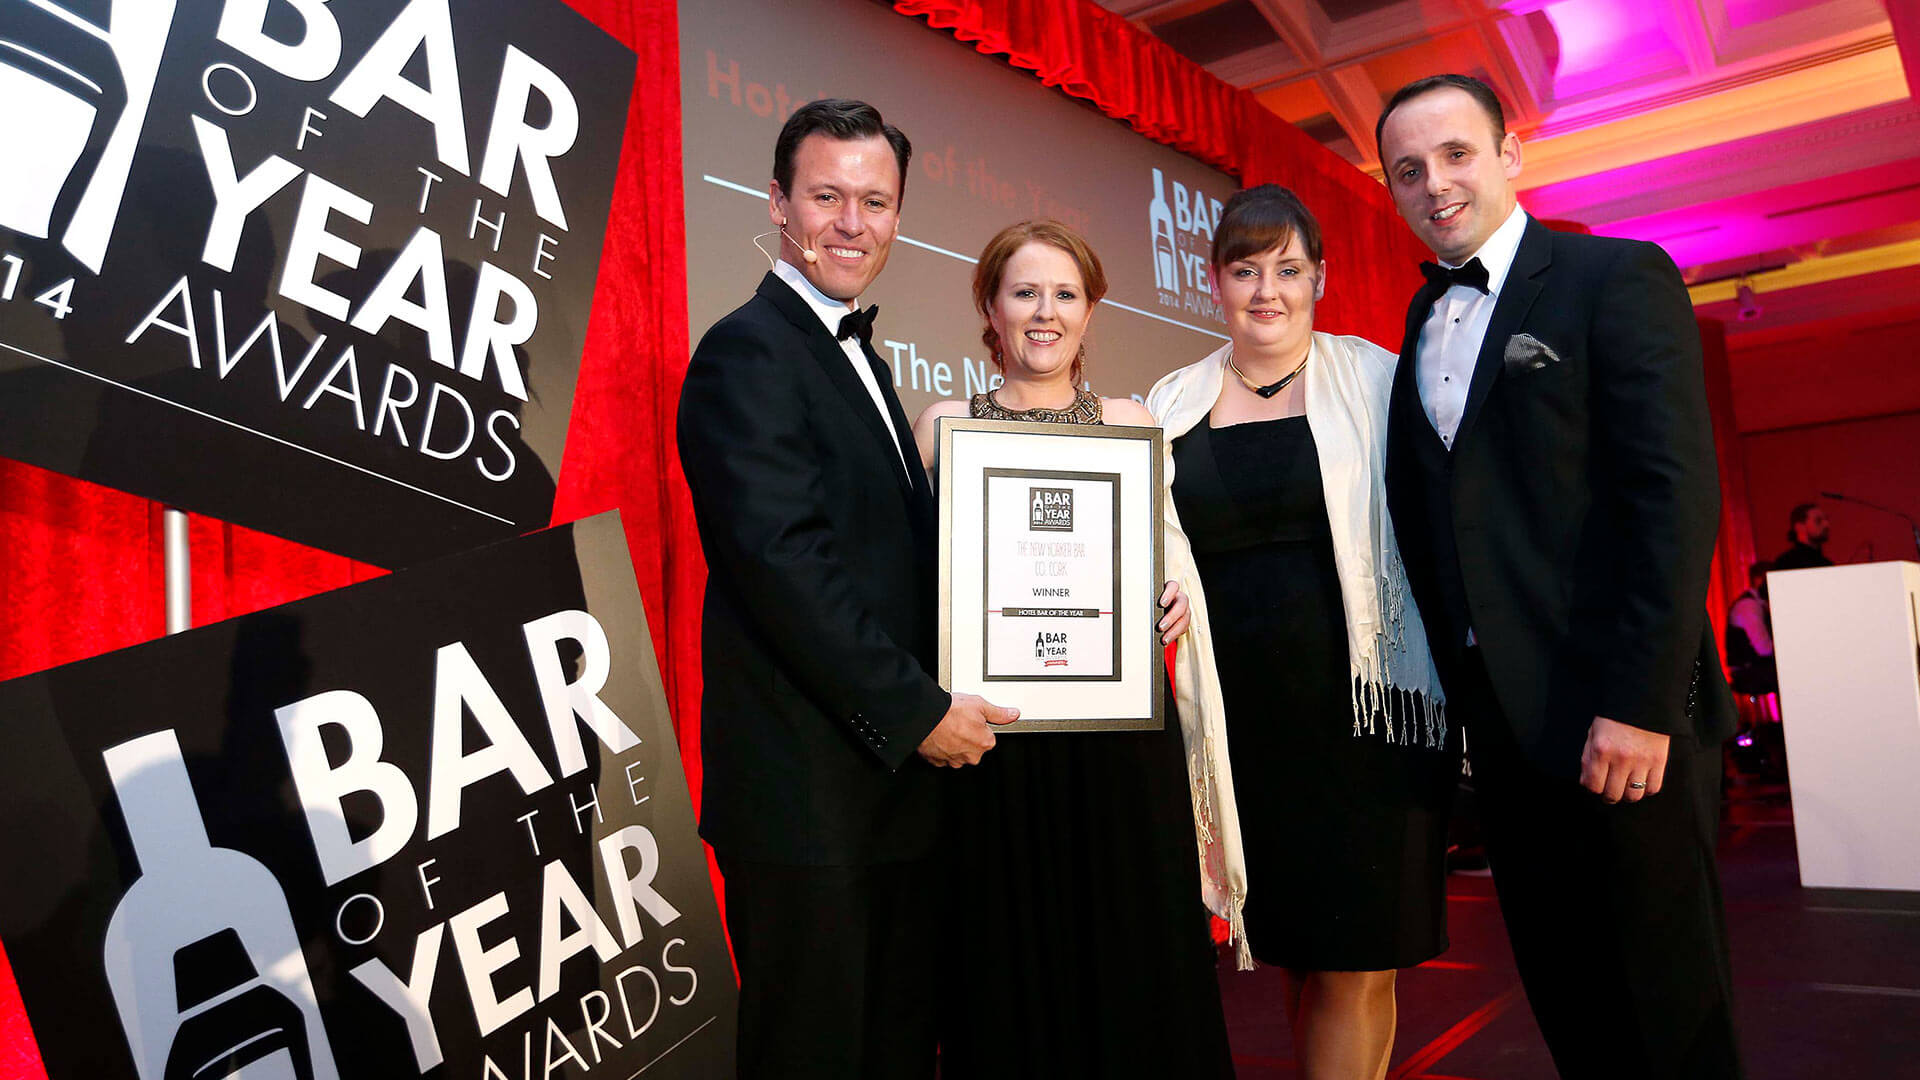 Cork International Hotel show their Bar of the Year award